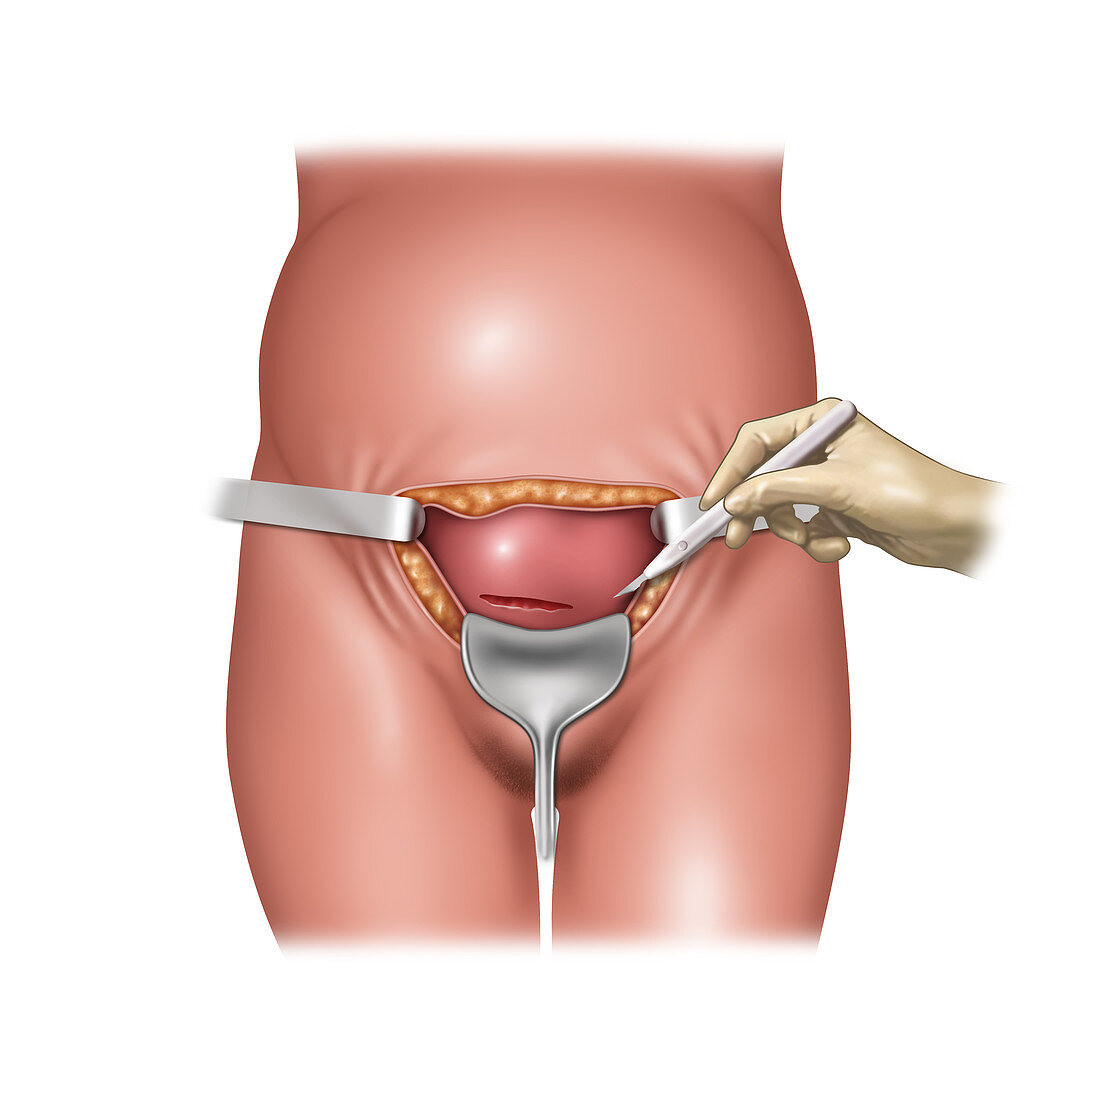 Cesarean Section Incisions, Illustration